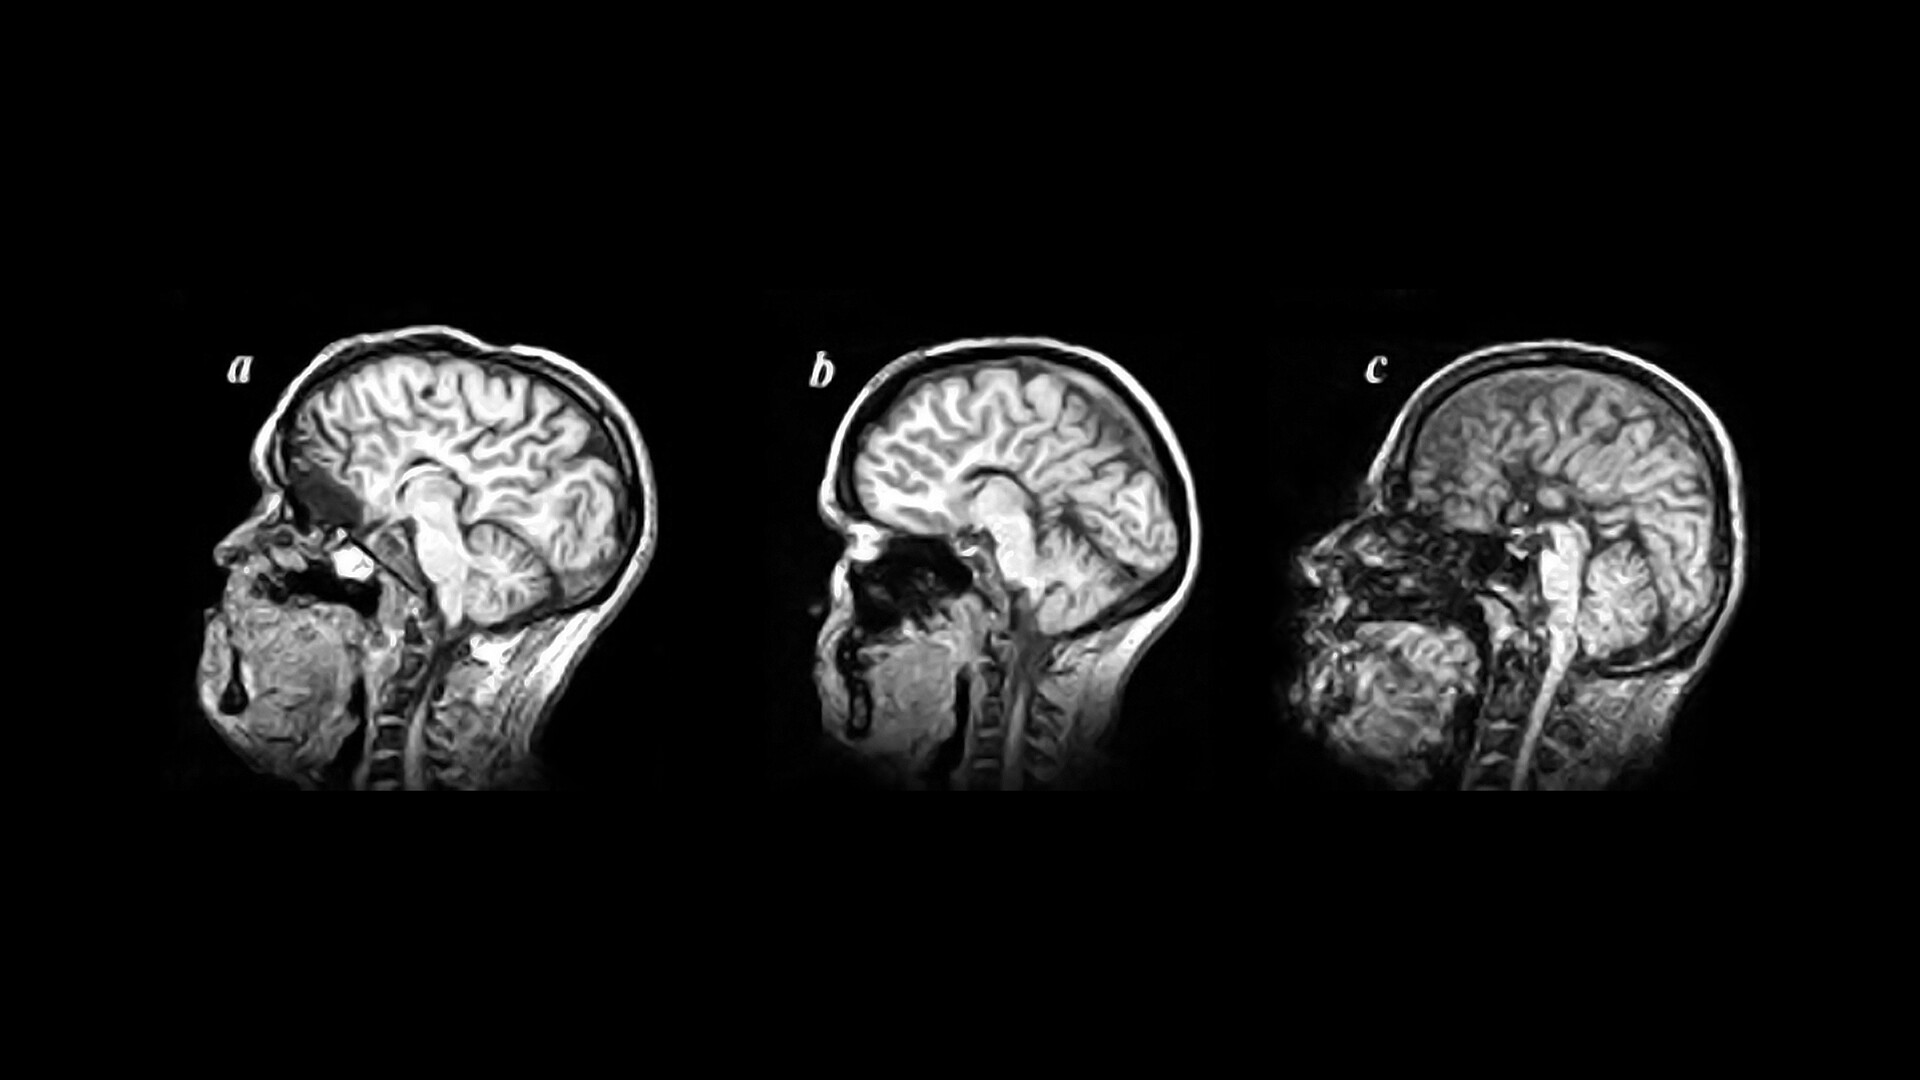 Гипоплазия червя. Дисгенезия мозолистого тела. Гипоплазия мозолистого тела головного мозга на УЗИ. ВПР ЦНС агенезия мозолистого тела.